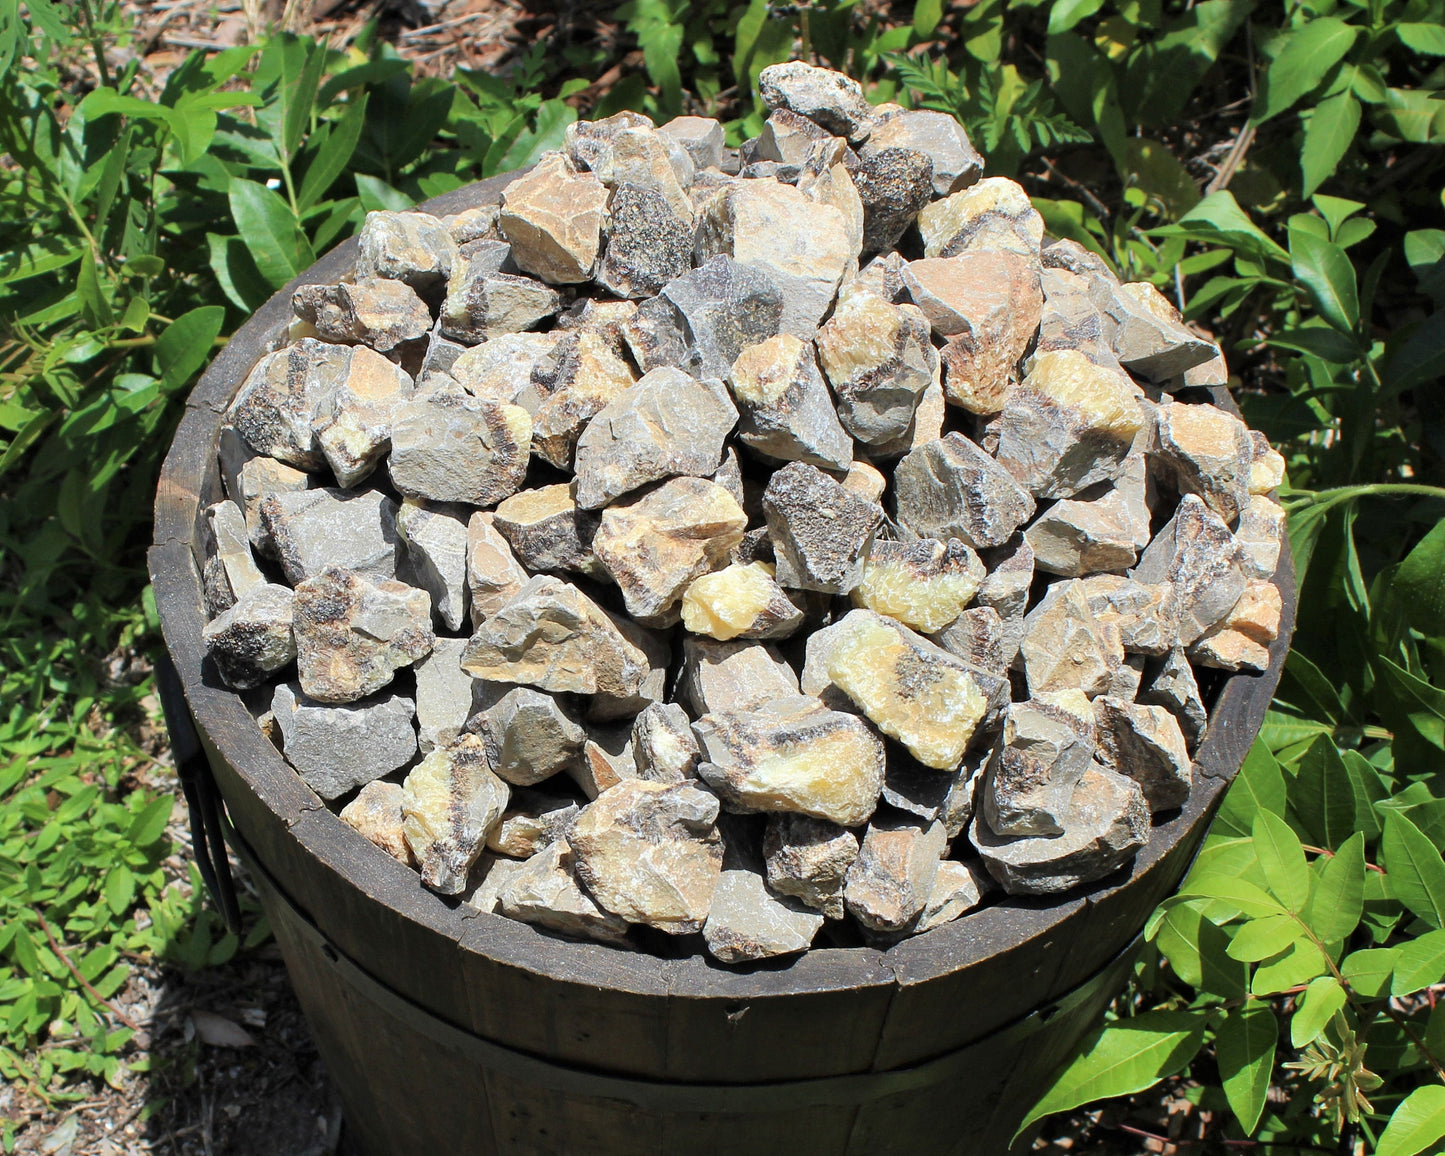 Septarian Rough Tumble Natural Stones